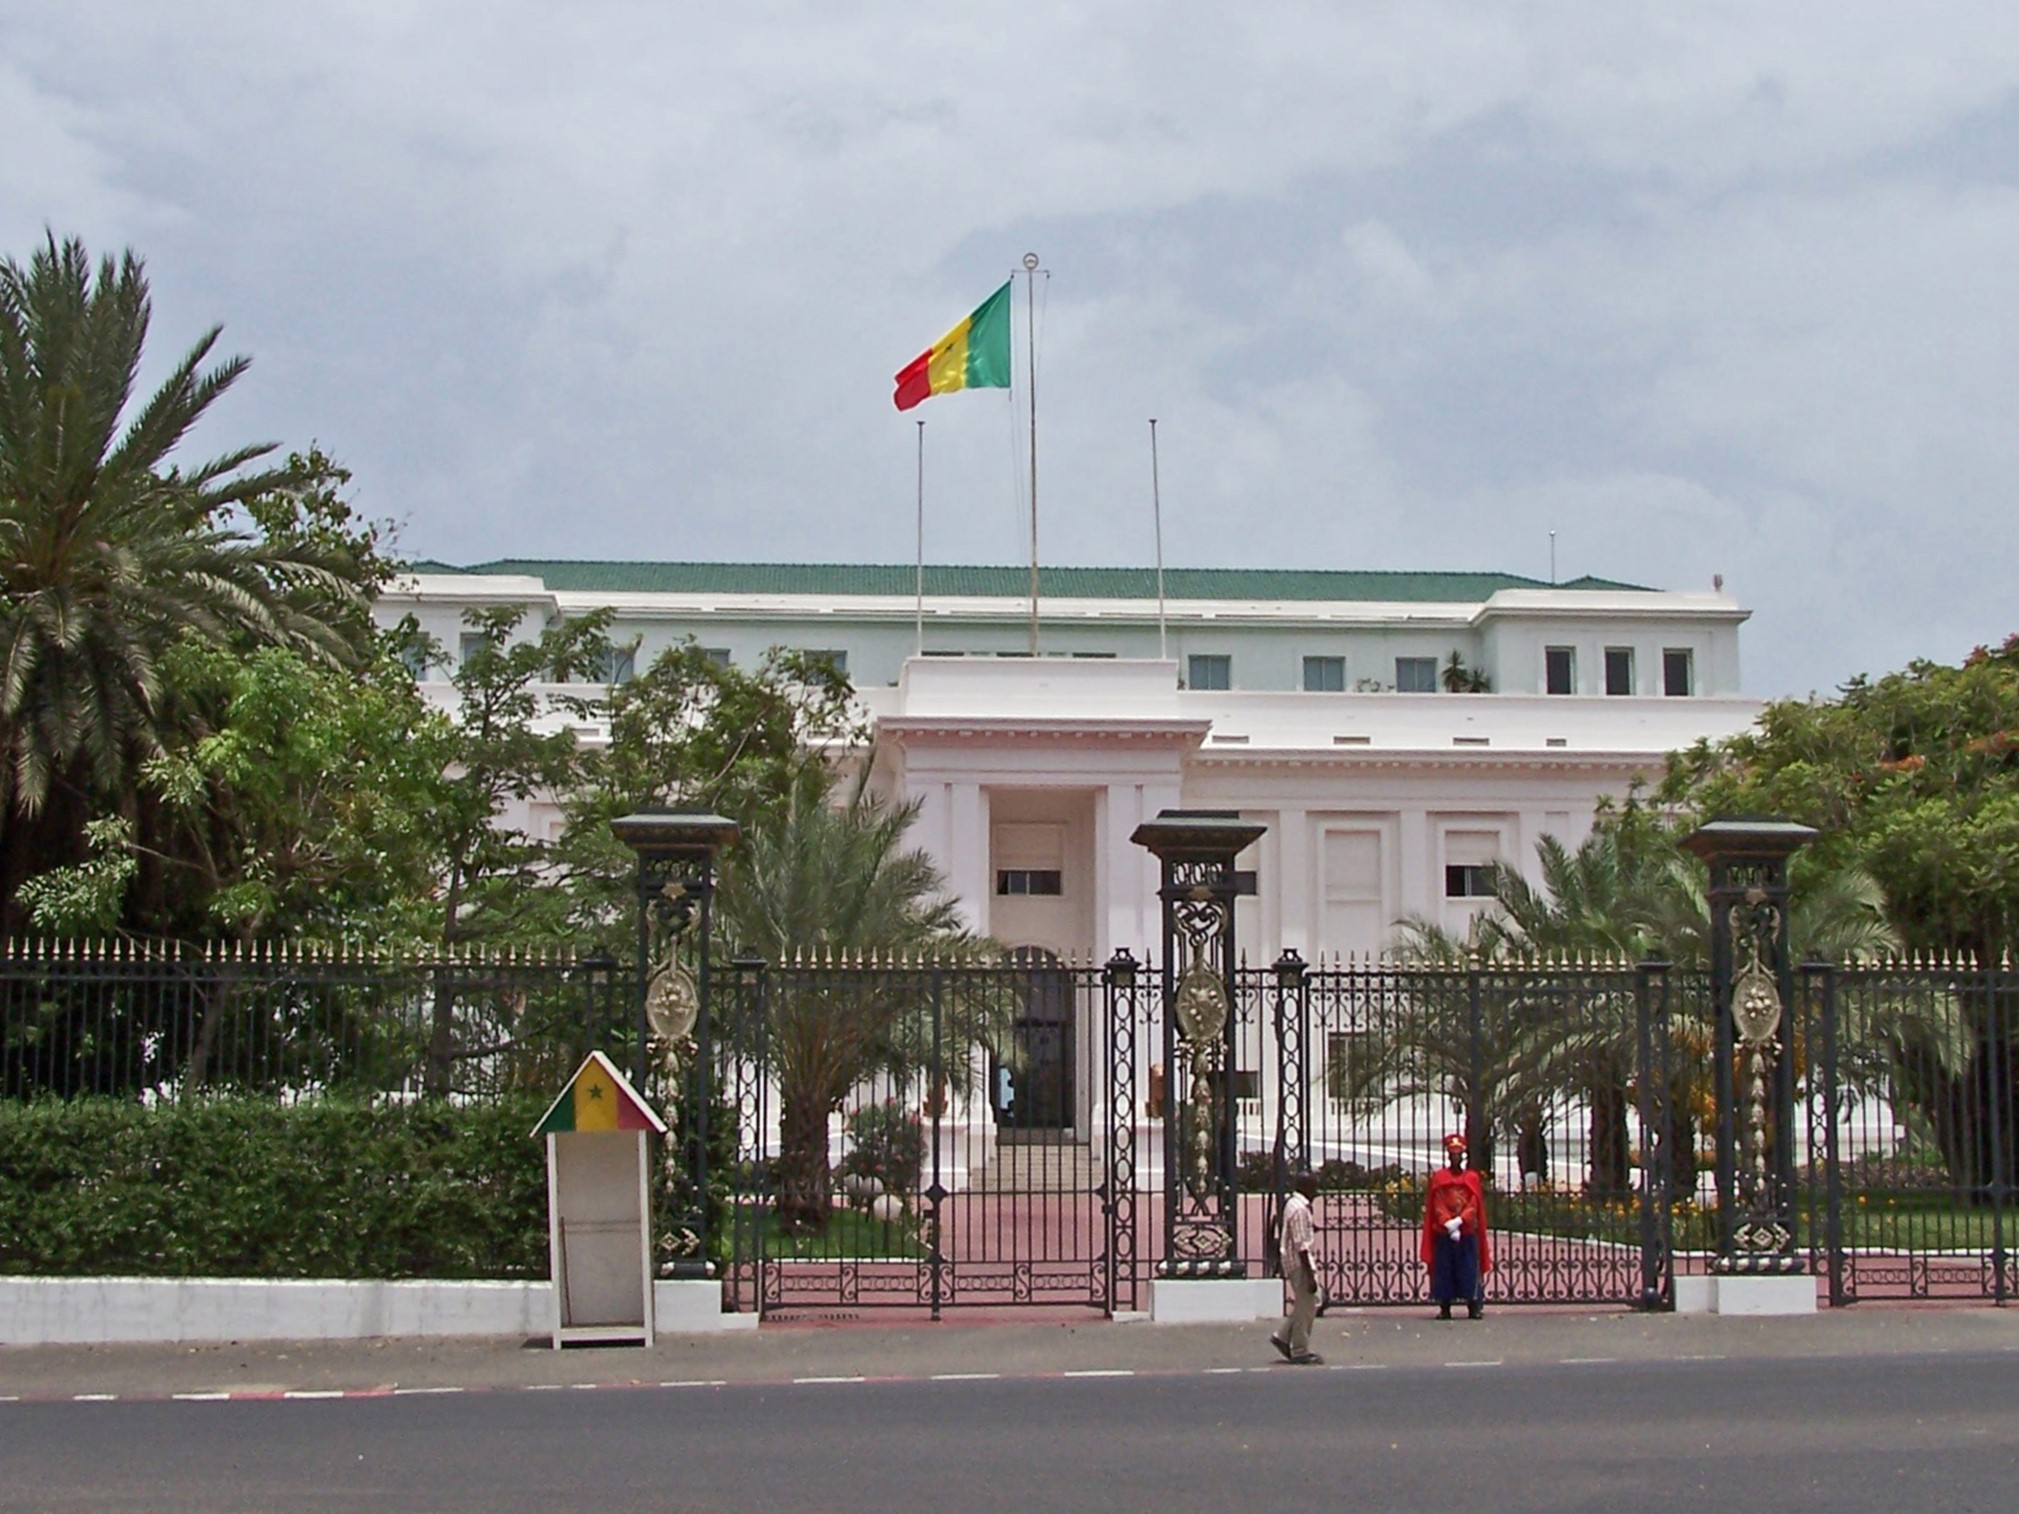 Photo credit: Bess Sadler, Wikimedia Commons, https://commons.wikimedia.org/wiki/File:Dakar-Palais_pr%C3%A9sidentiel.jpg